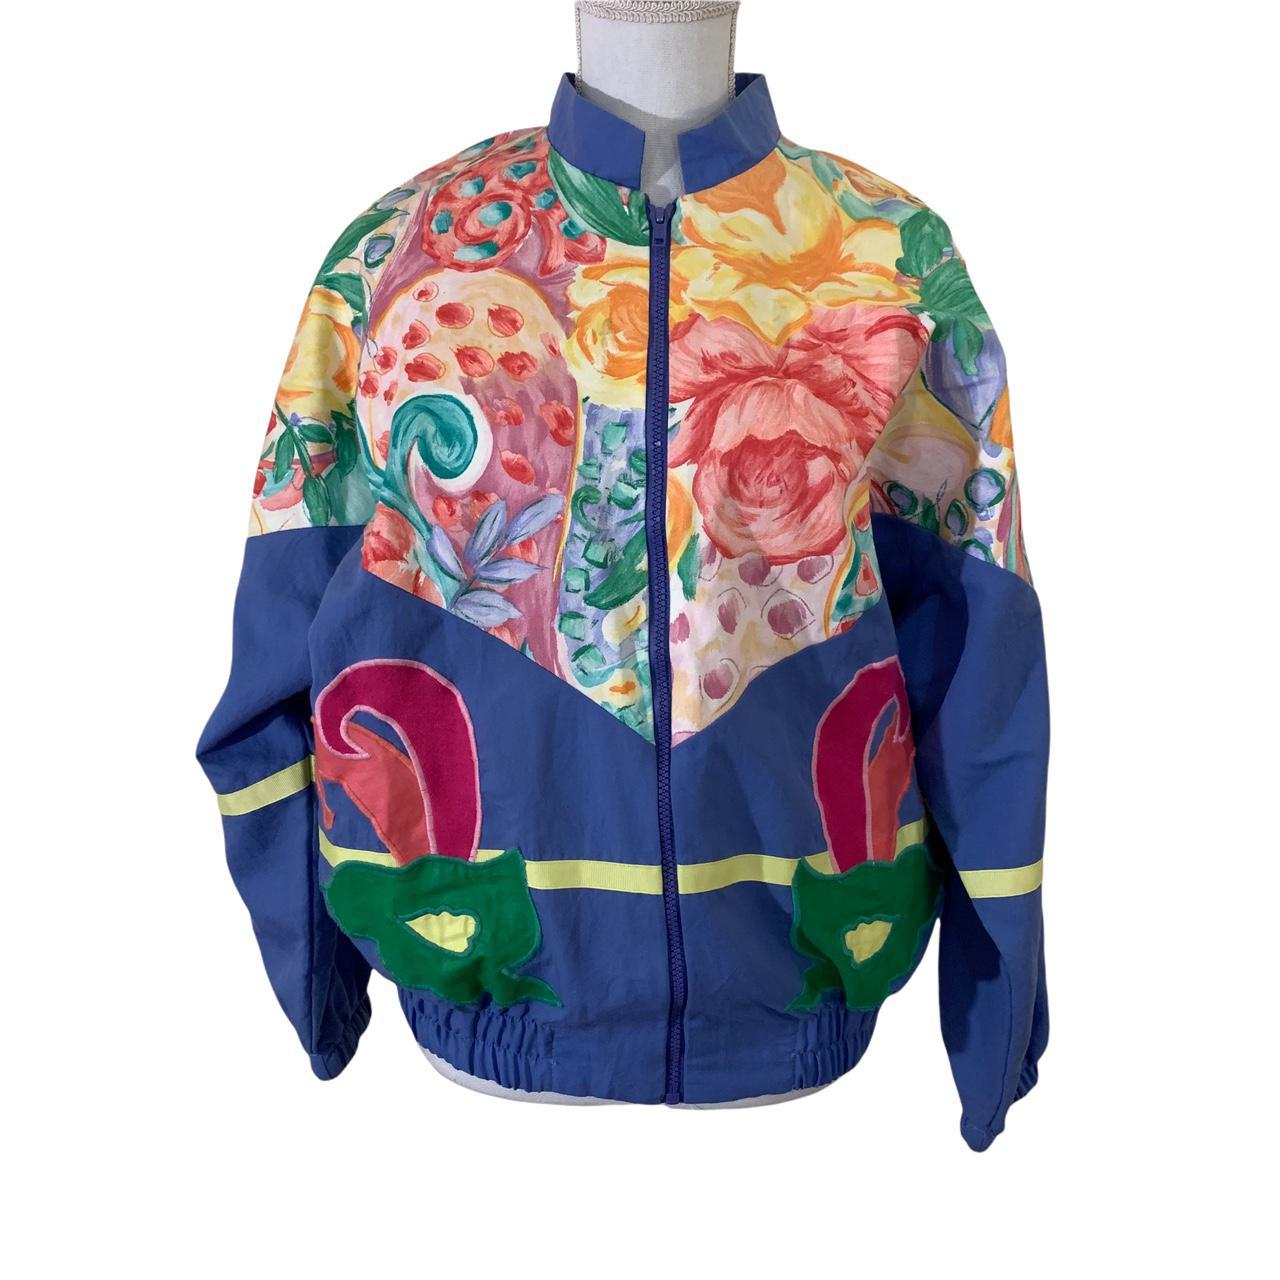 Vintage 80s Windbreaker Jacket Floral Pattern with... - Depop